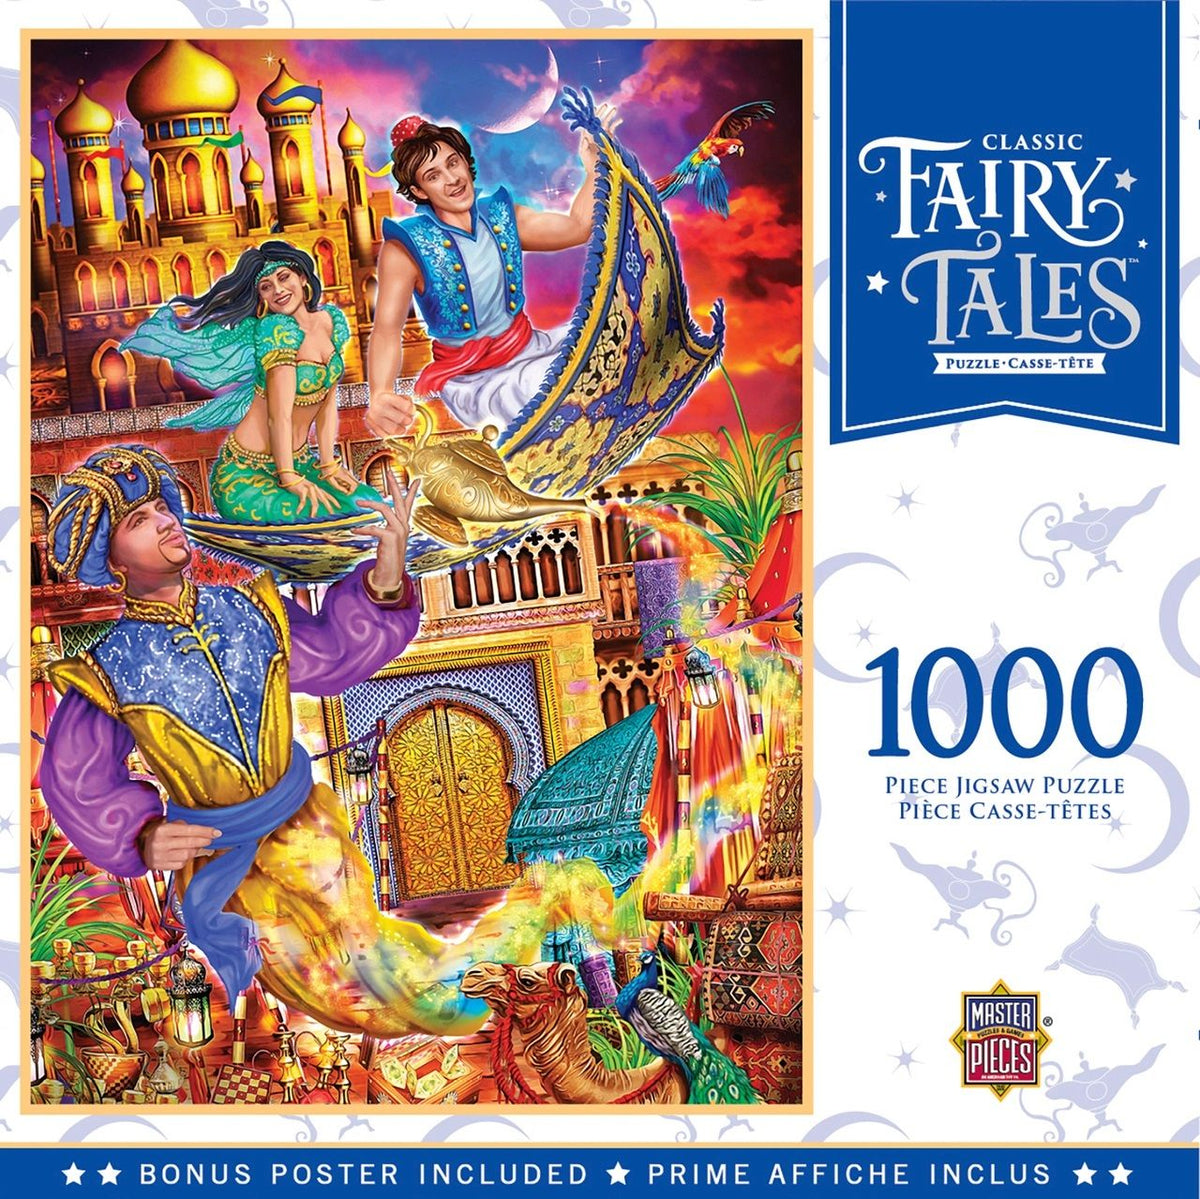 Masterpieces puzzle classic fairy tales Aladdin Puzzle 1000 pieces